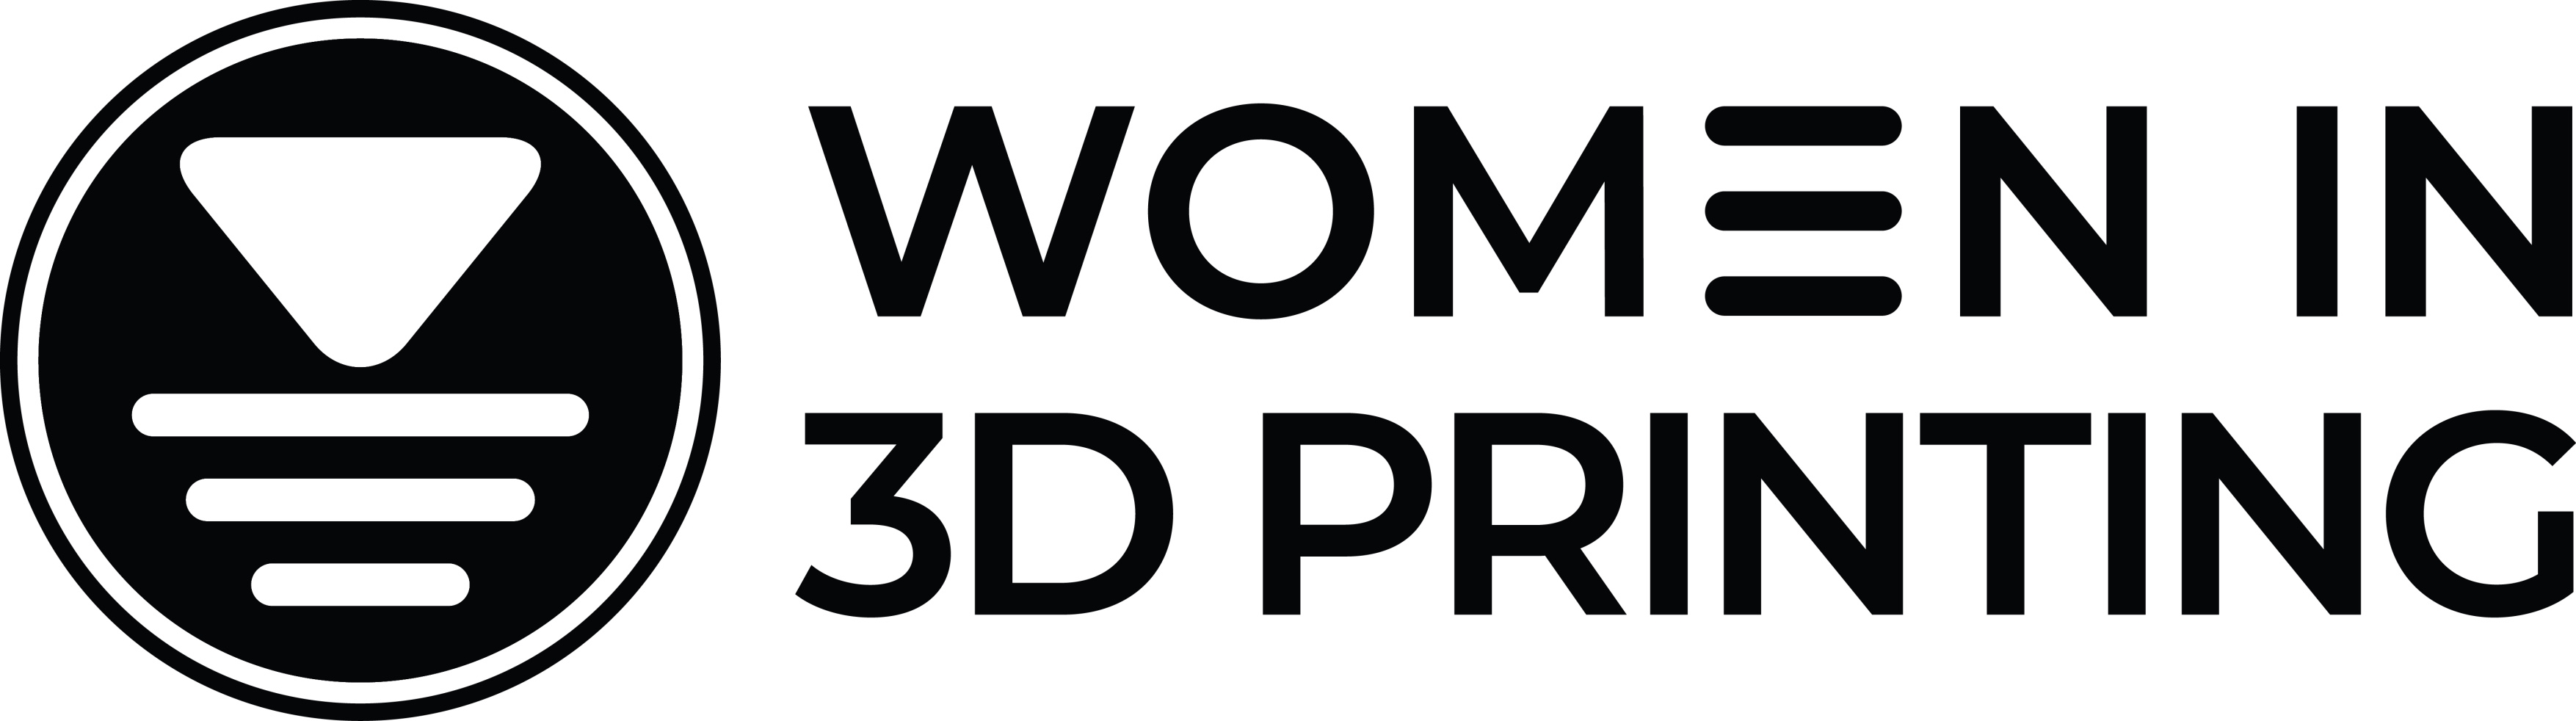 Women in 3DPrinting